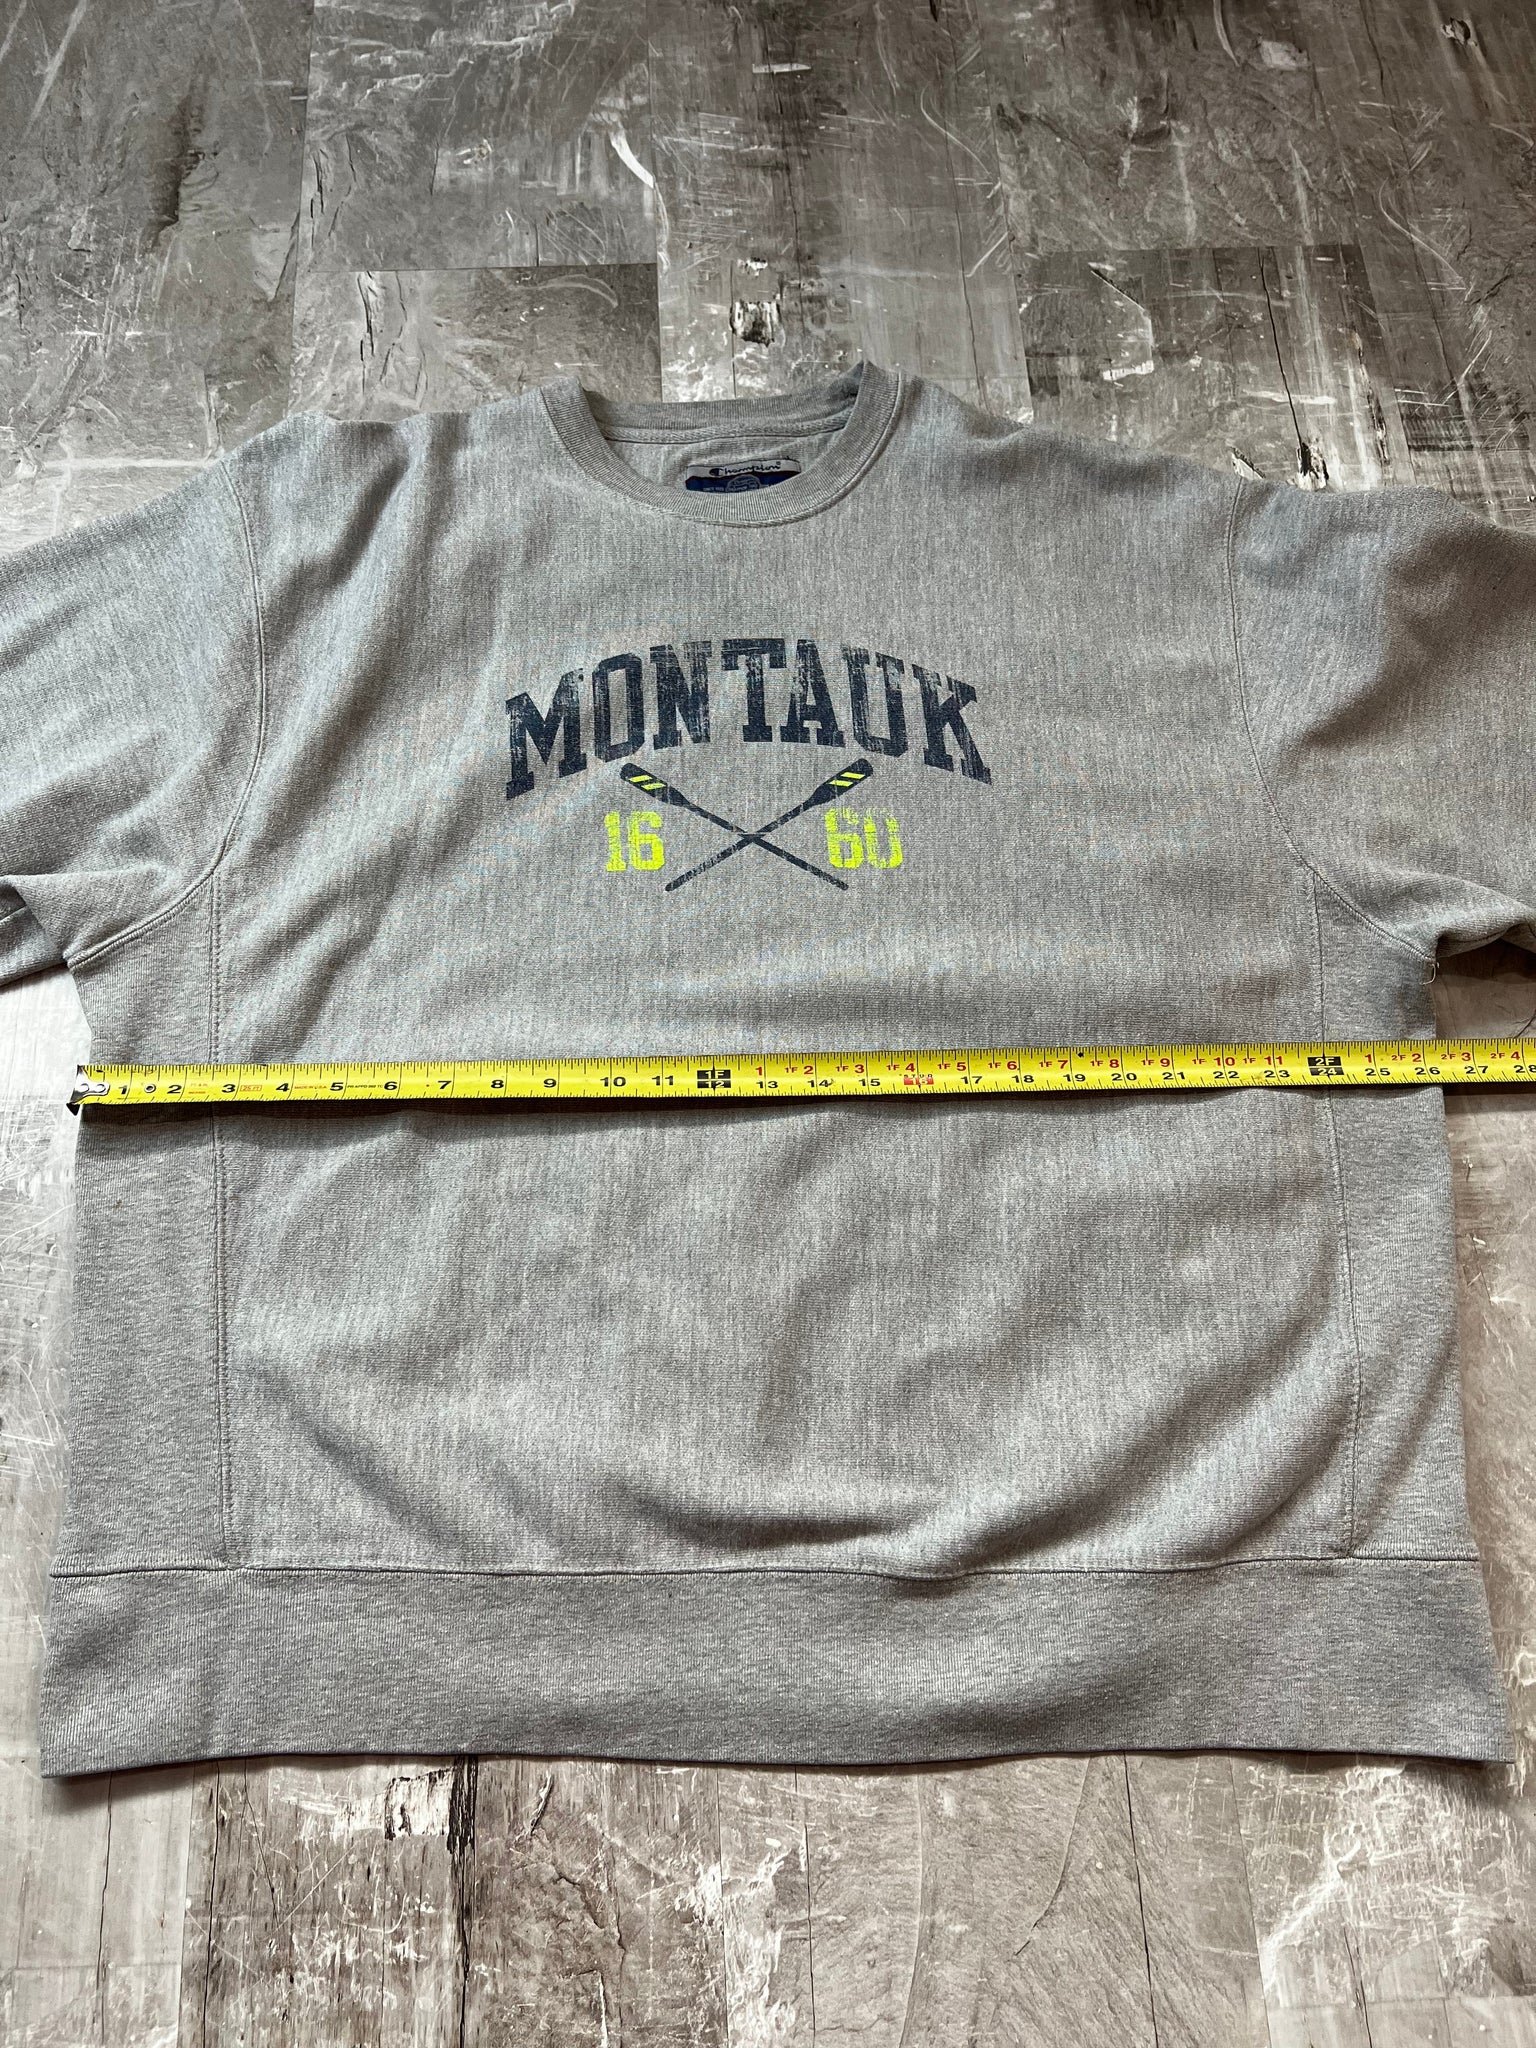 Champion Montauk reverse weave sweatshirt XXL